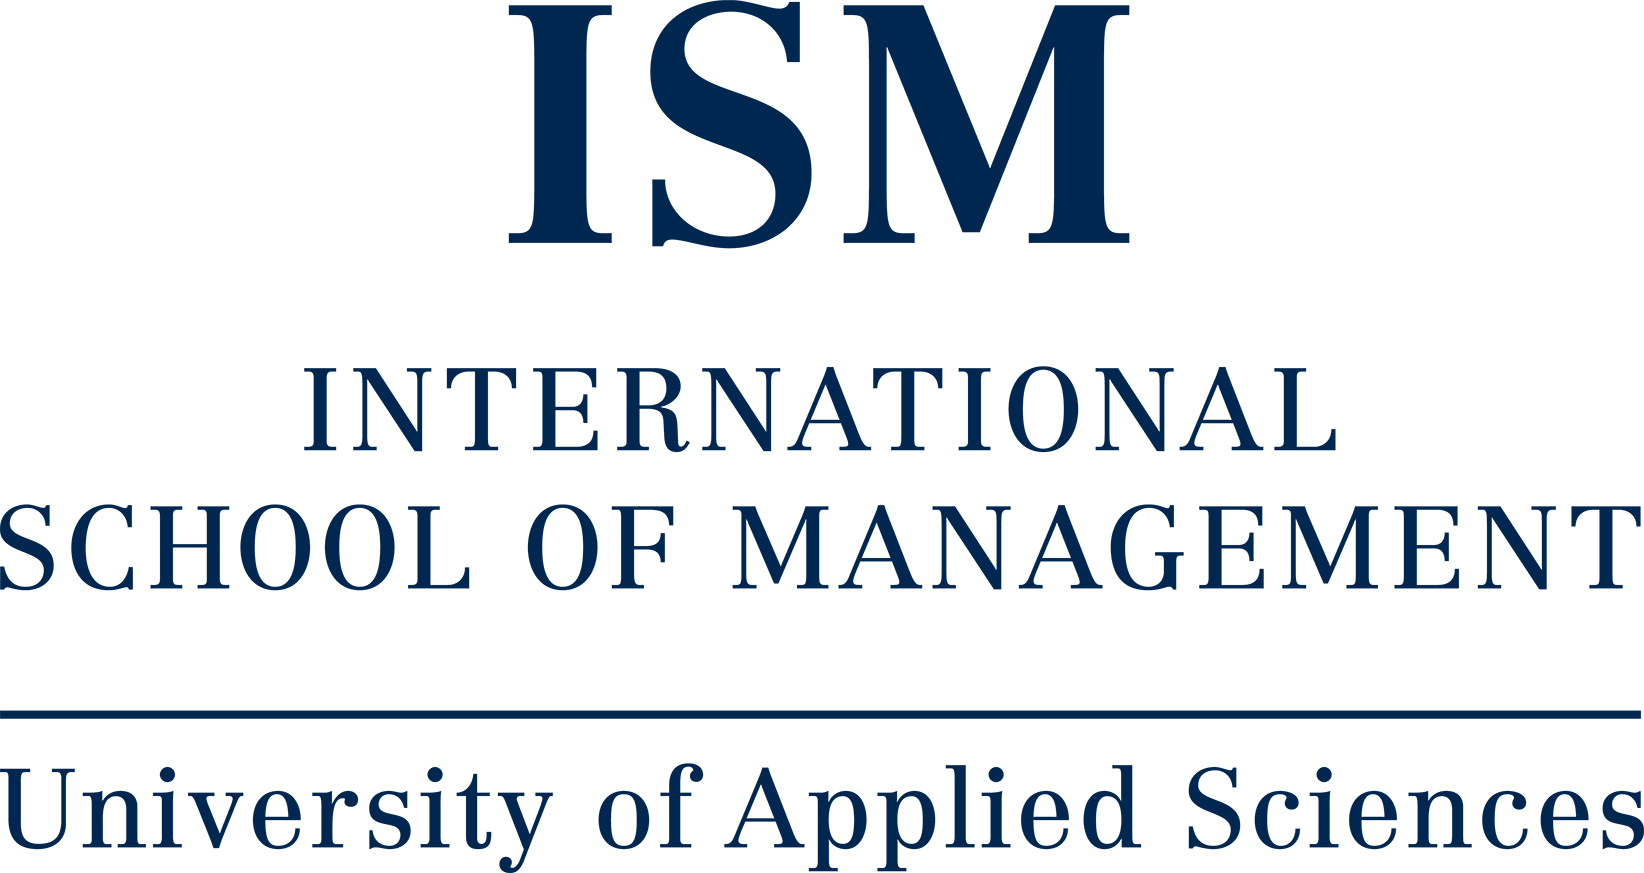 ISM Logo - File:ISM logo monochrome.png - Wikimedia Commons